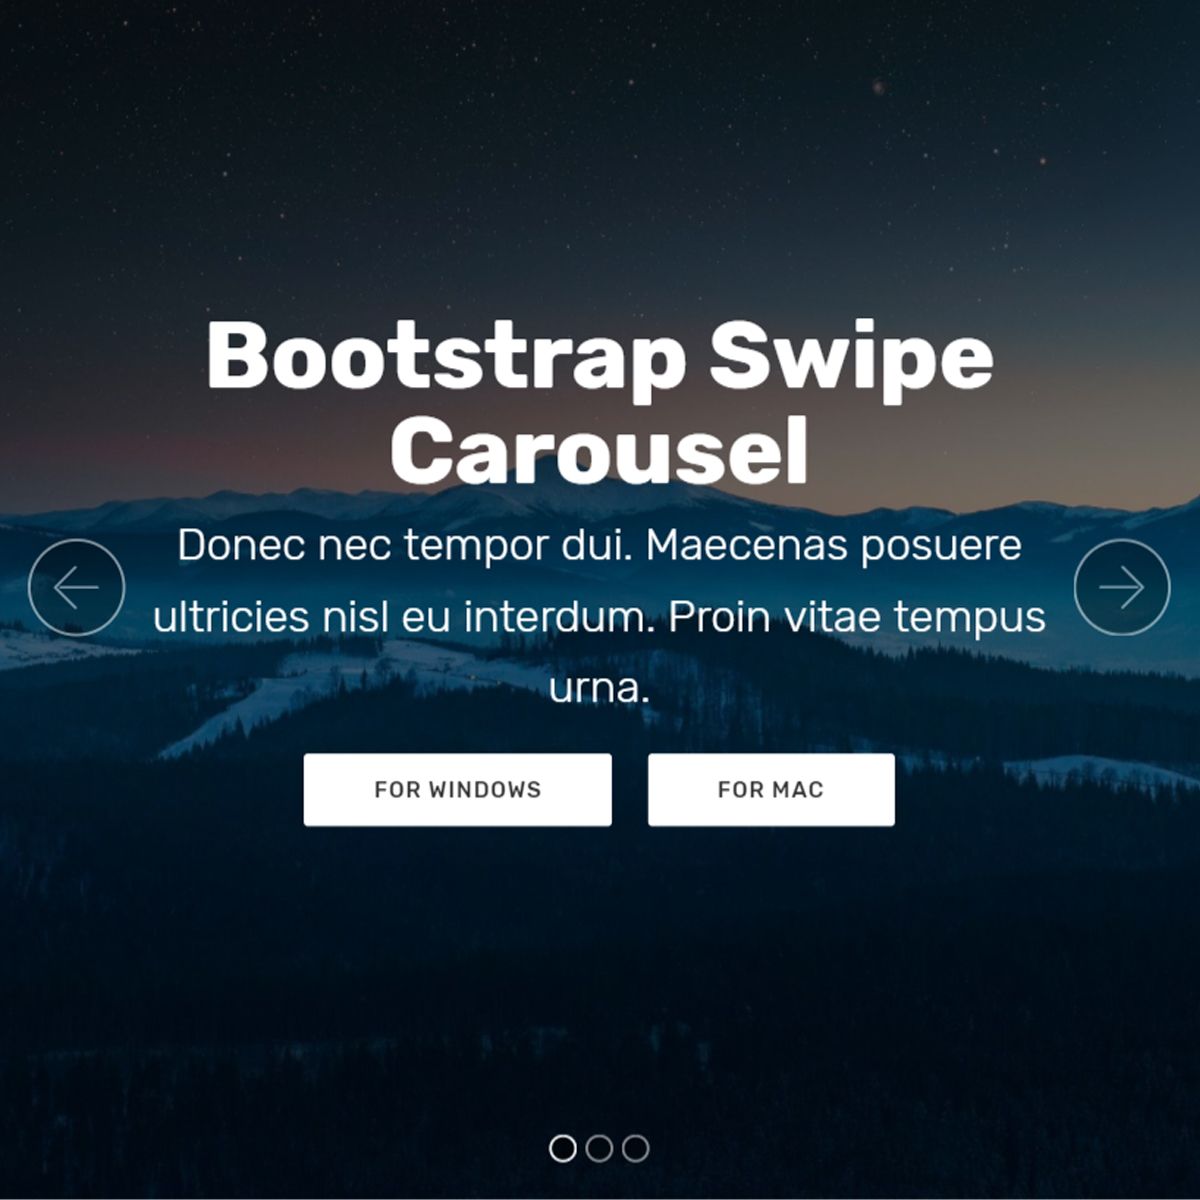 Mobile Bootstrap Illustration Carousel